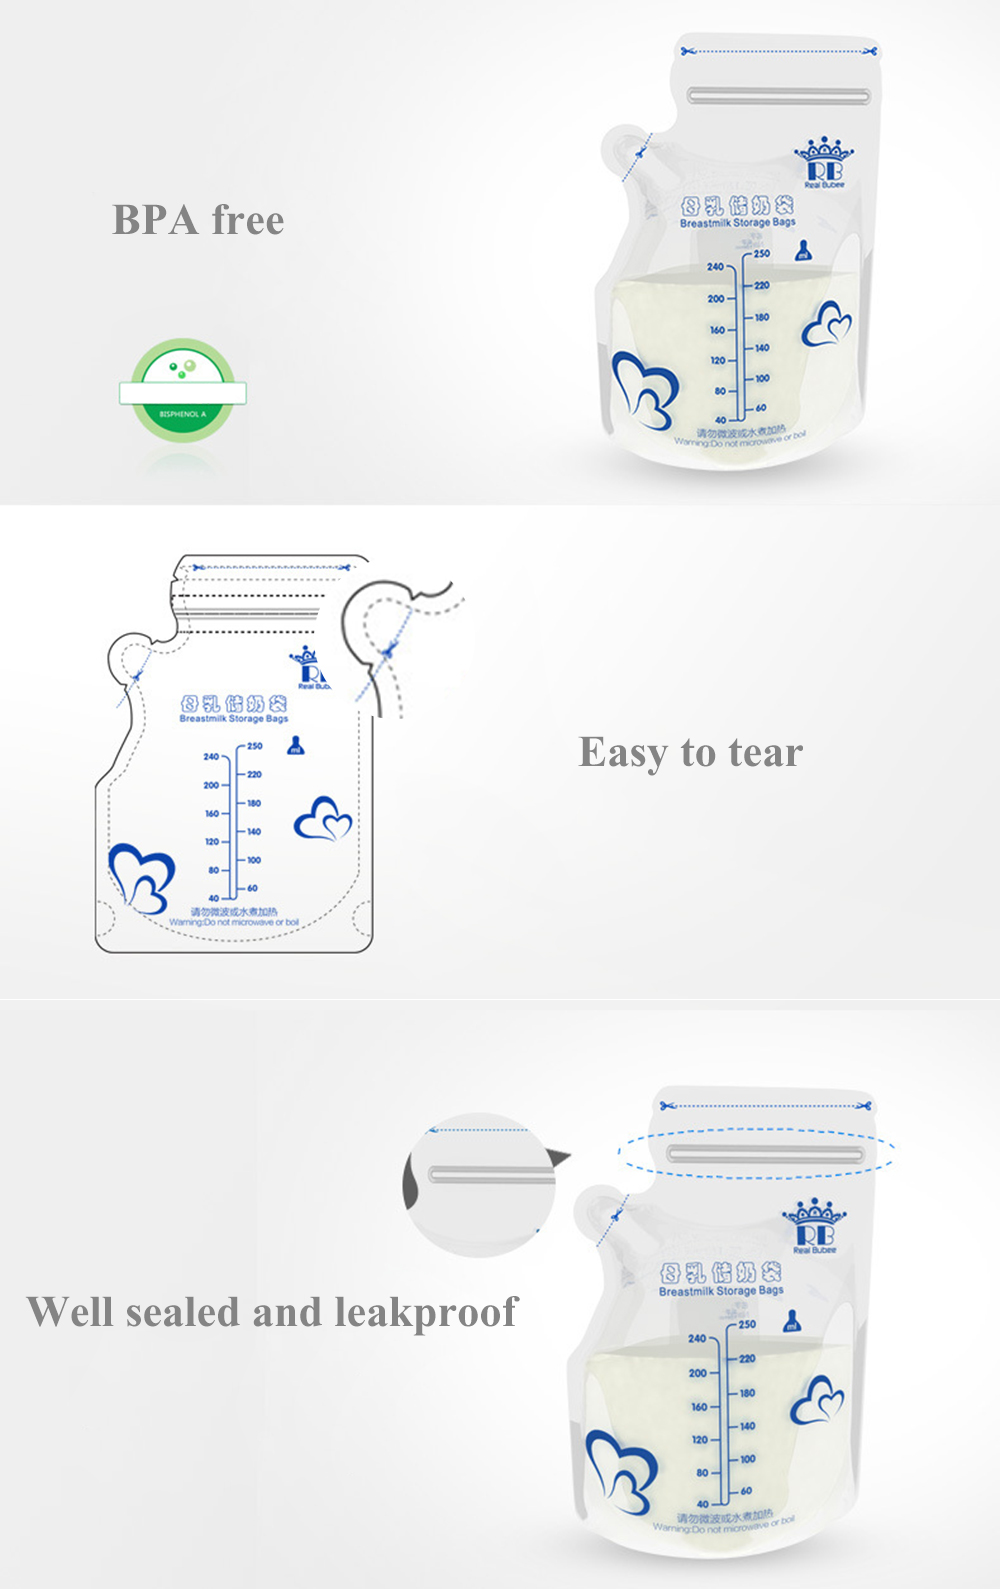 Real Bubee 30pcs 250ml Breast Milk Storage Bags